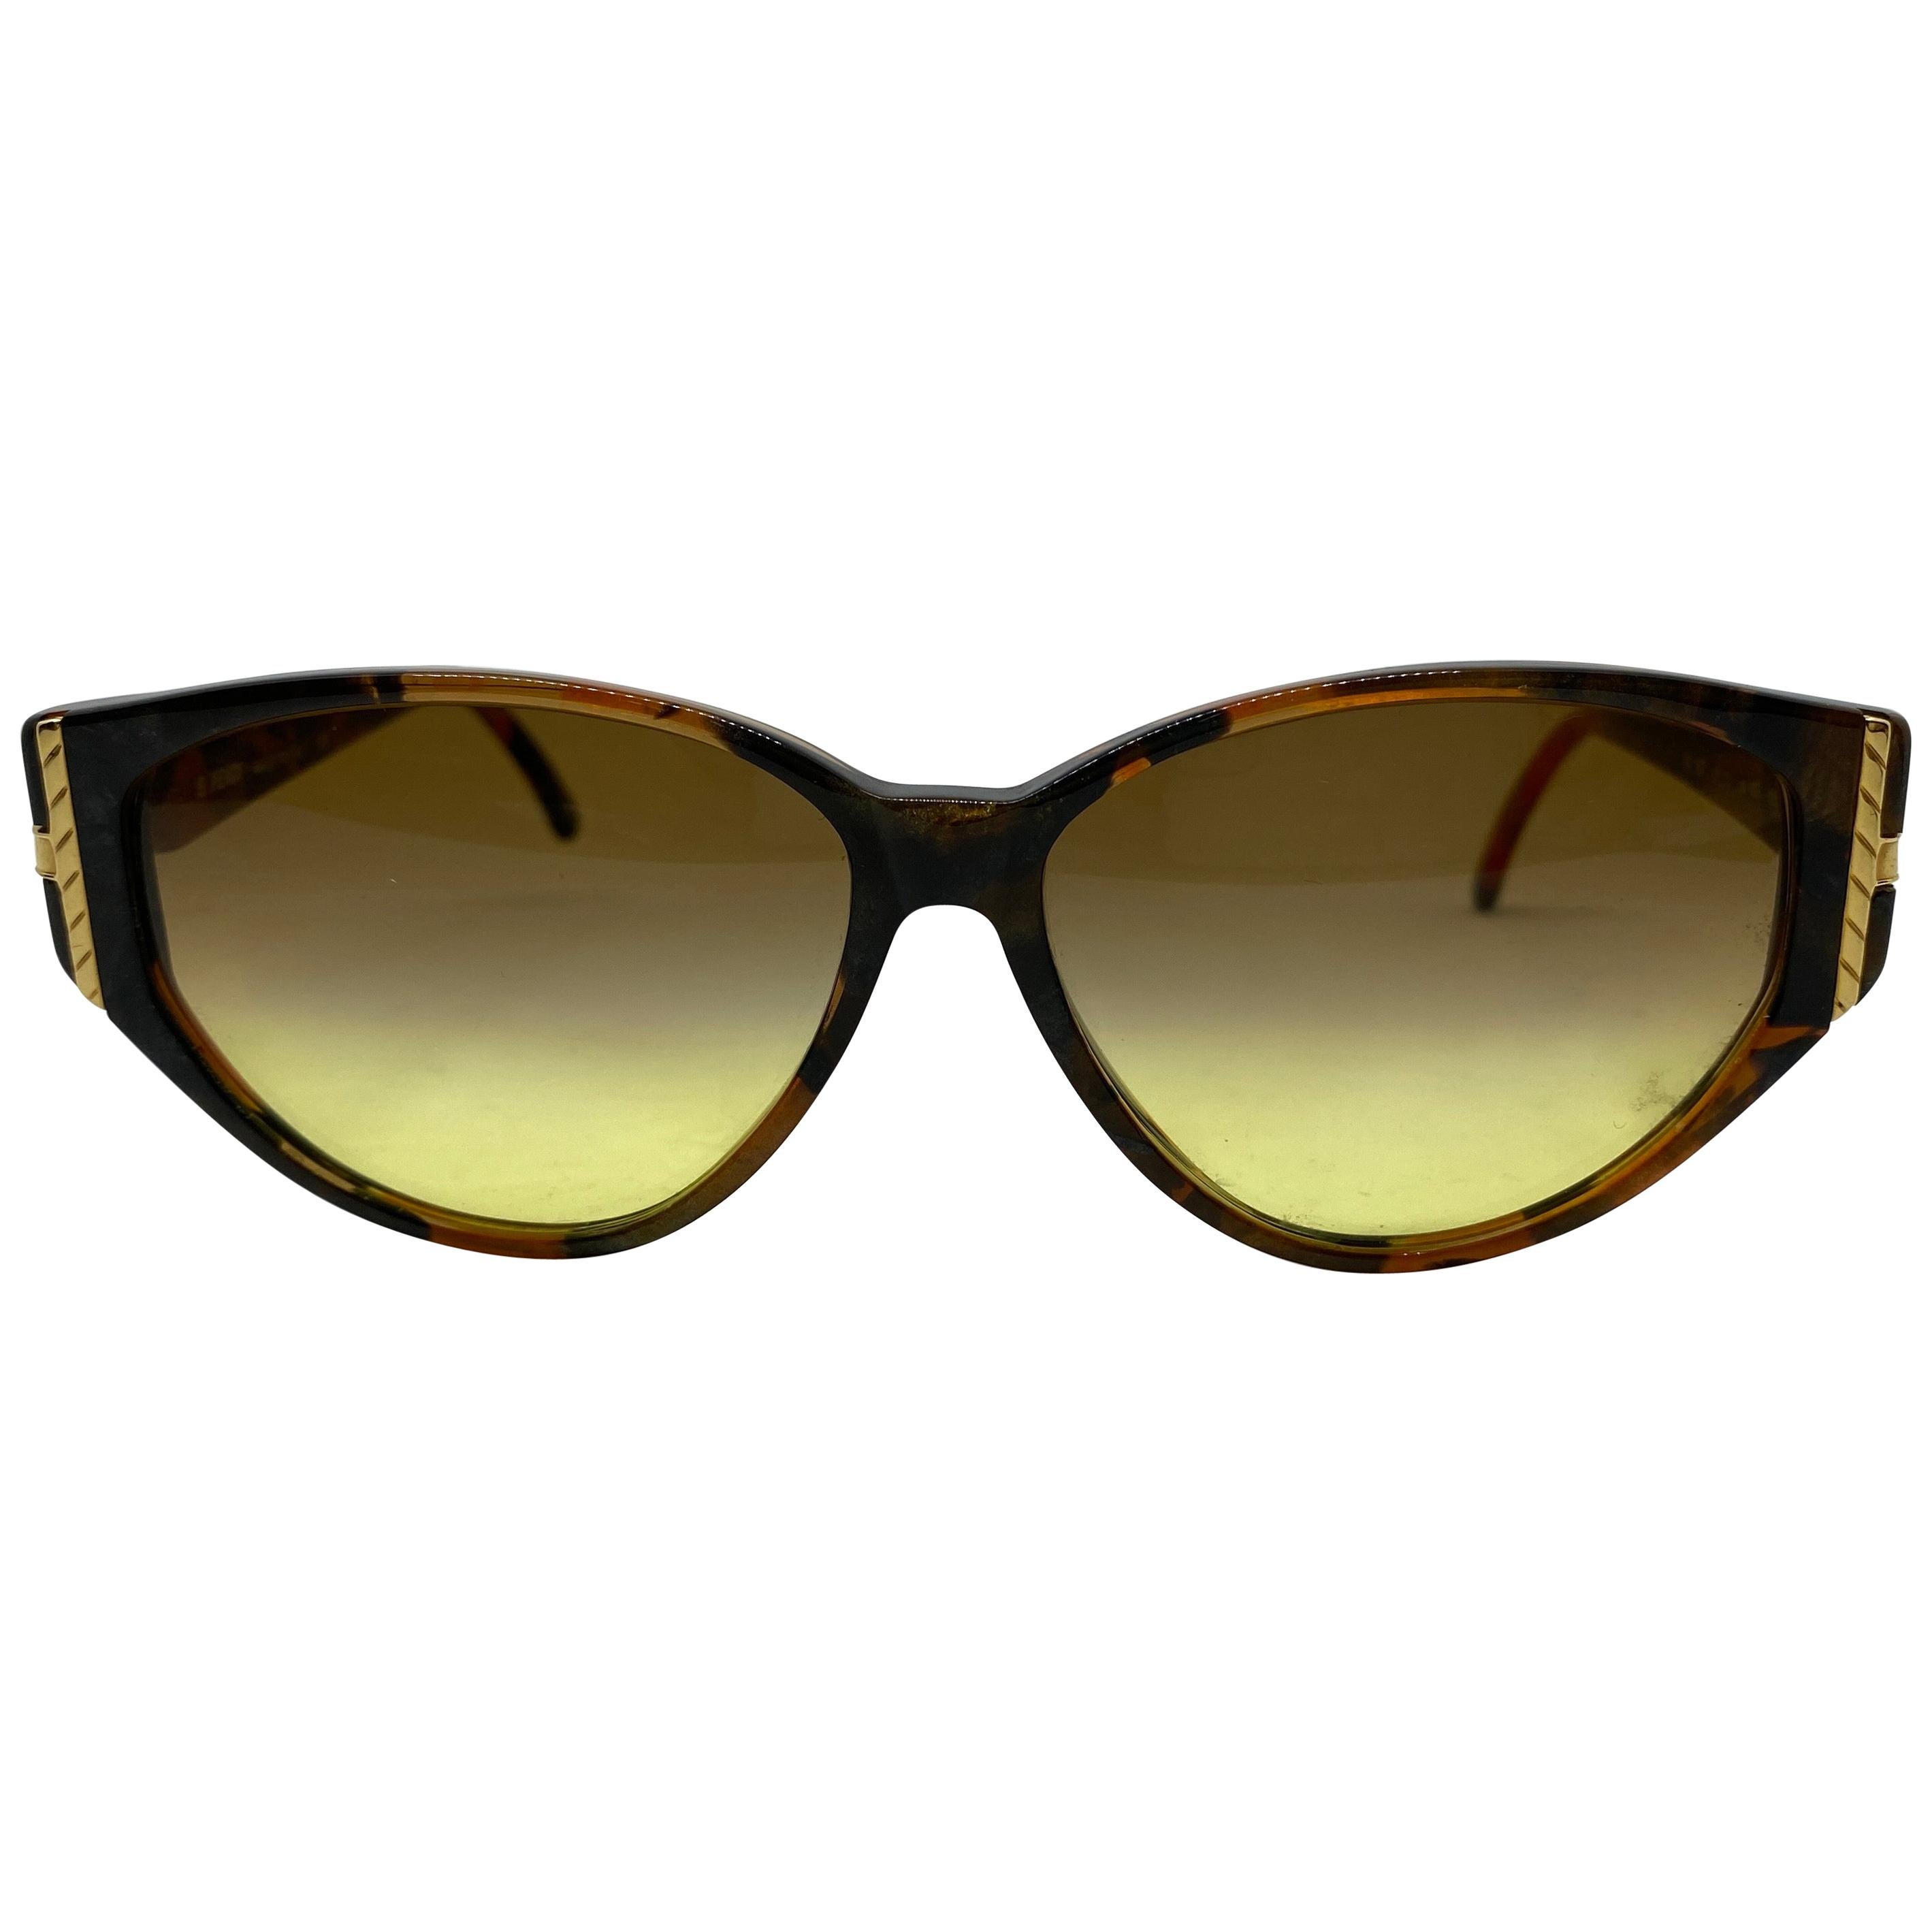 1990s Vintage Italian Fake Tortoise Lucite Sunglasses by Fendi For Sale